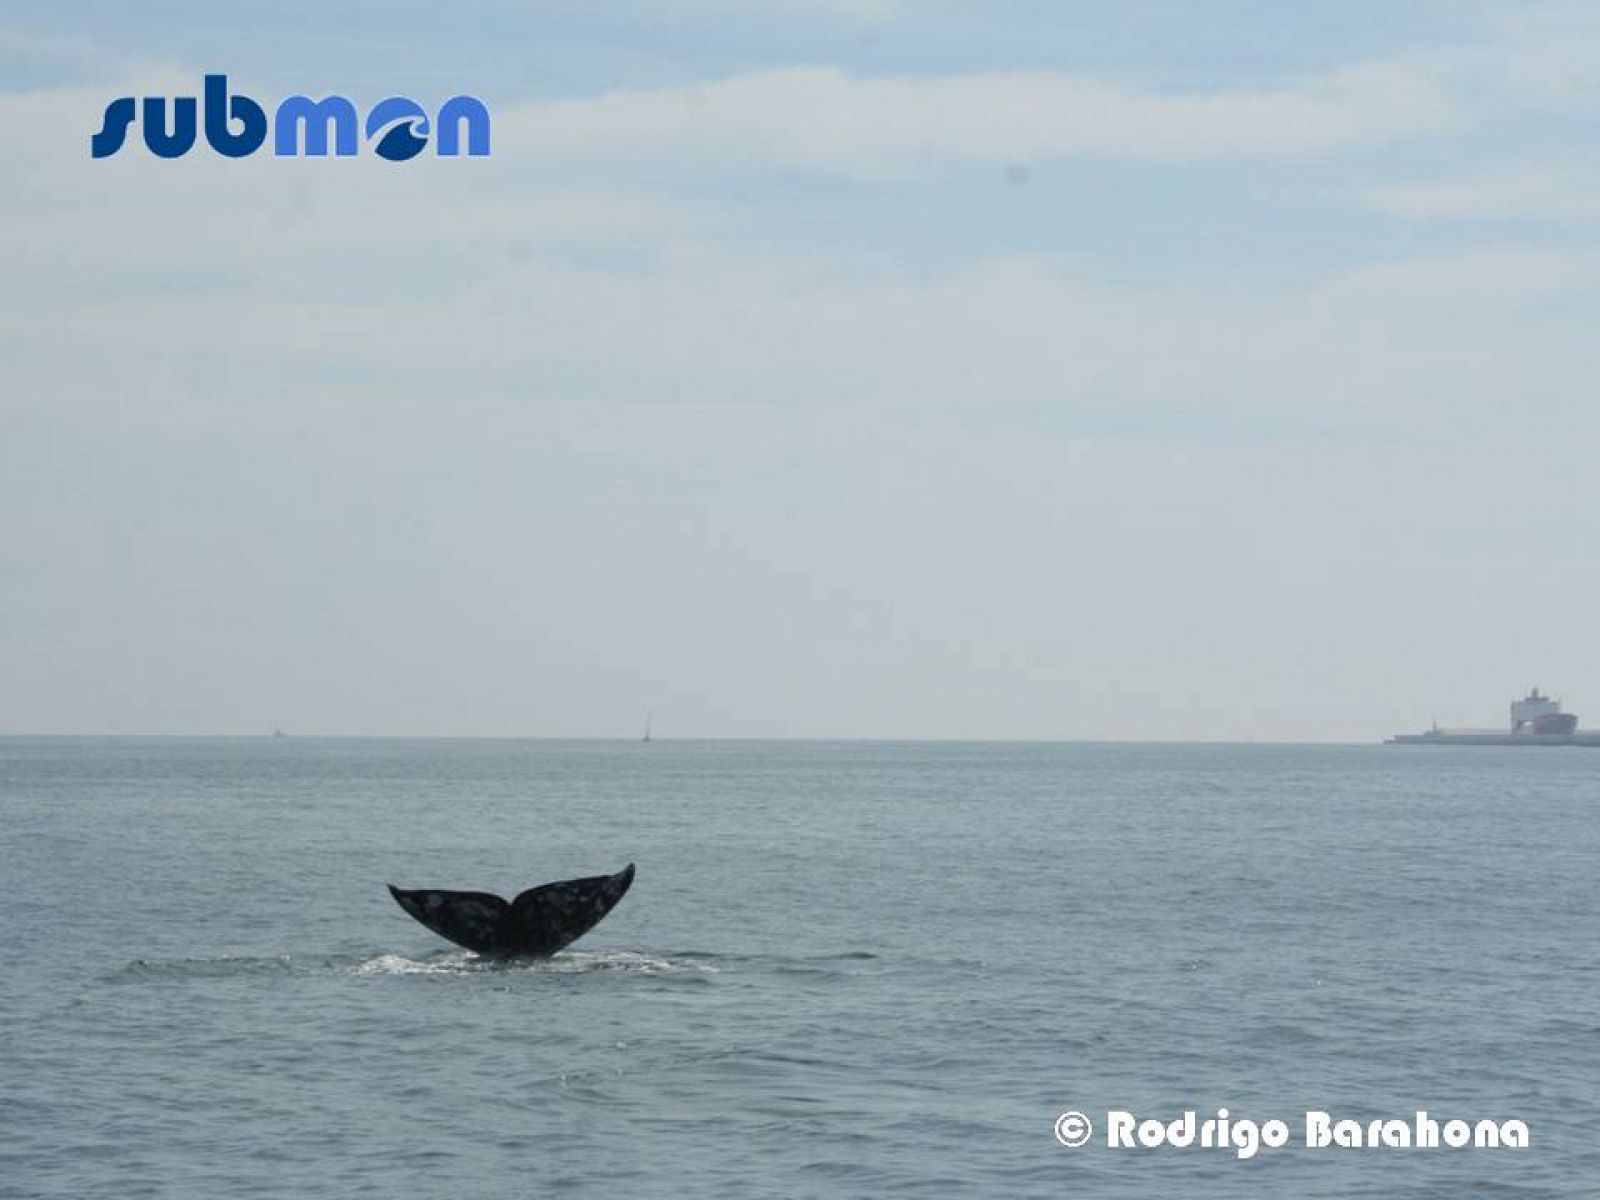 La ballena gris avistada frente a la costa de Barcelona